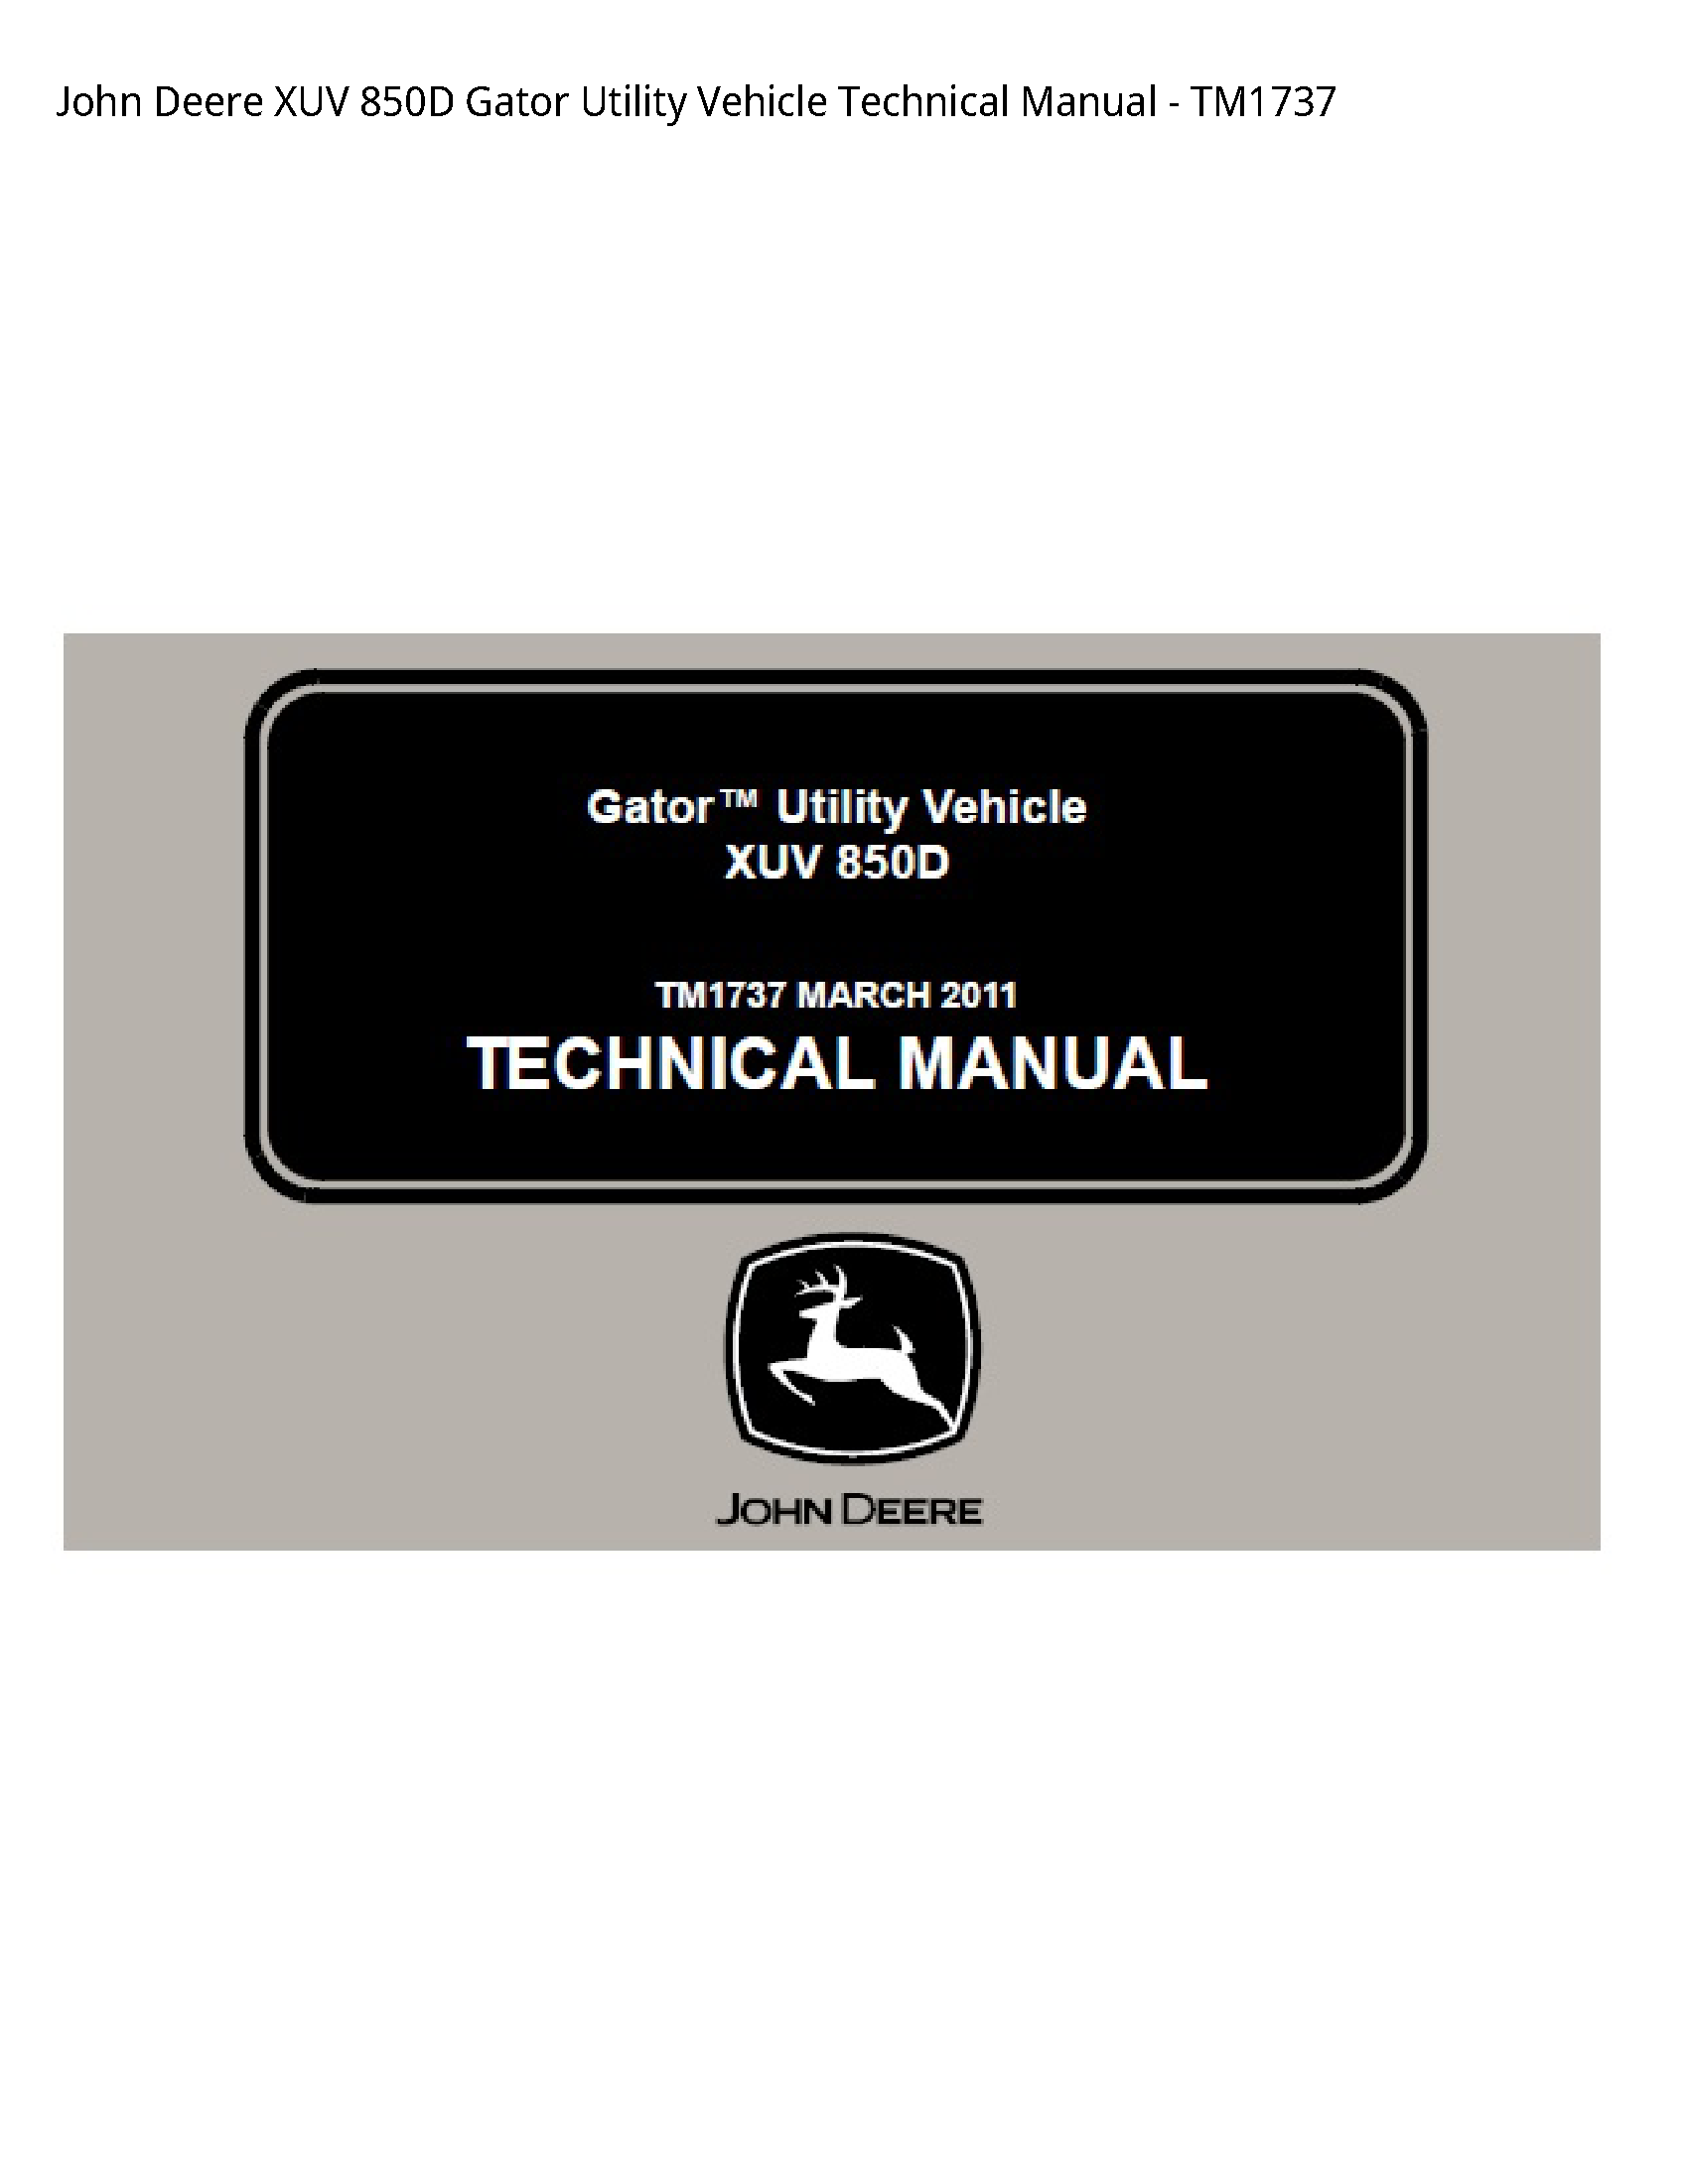 John Deere 850D XUV Gator Utility Vehicle Technical manual